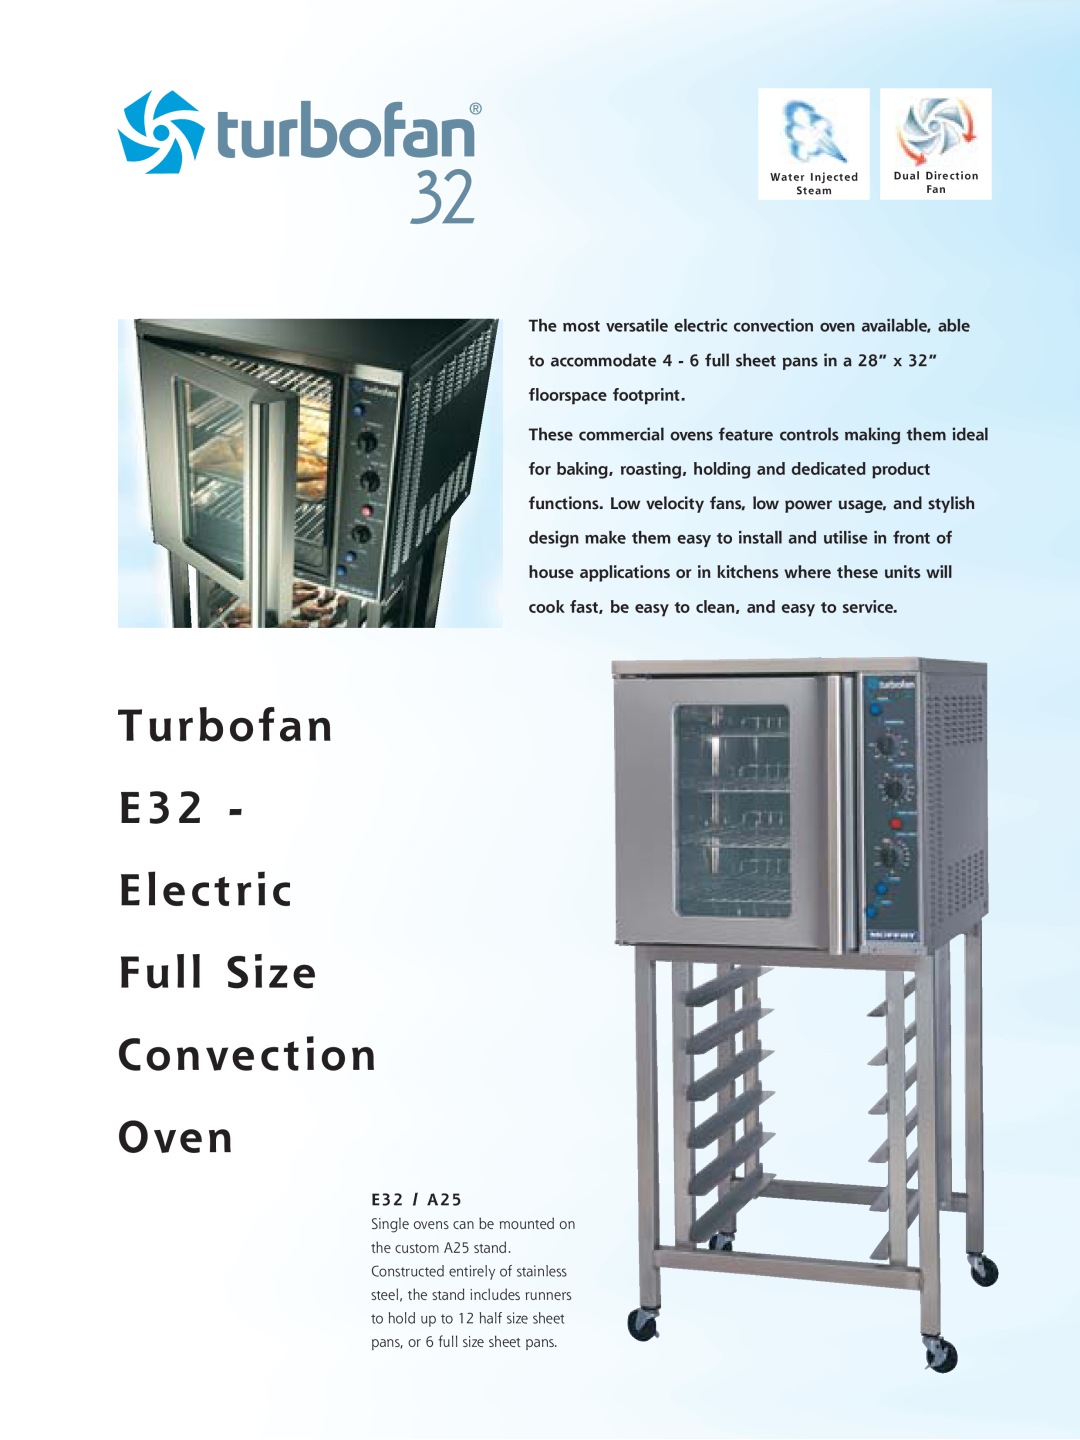 Moffat E25 manual T u r b ofa n E32 Electric Full Size Convection, Oven 